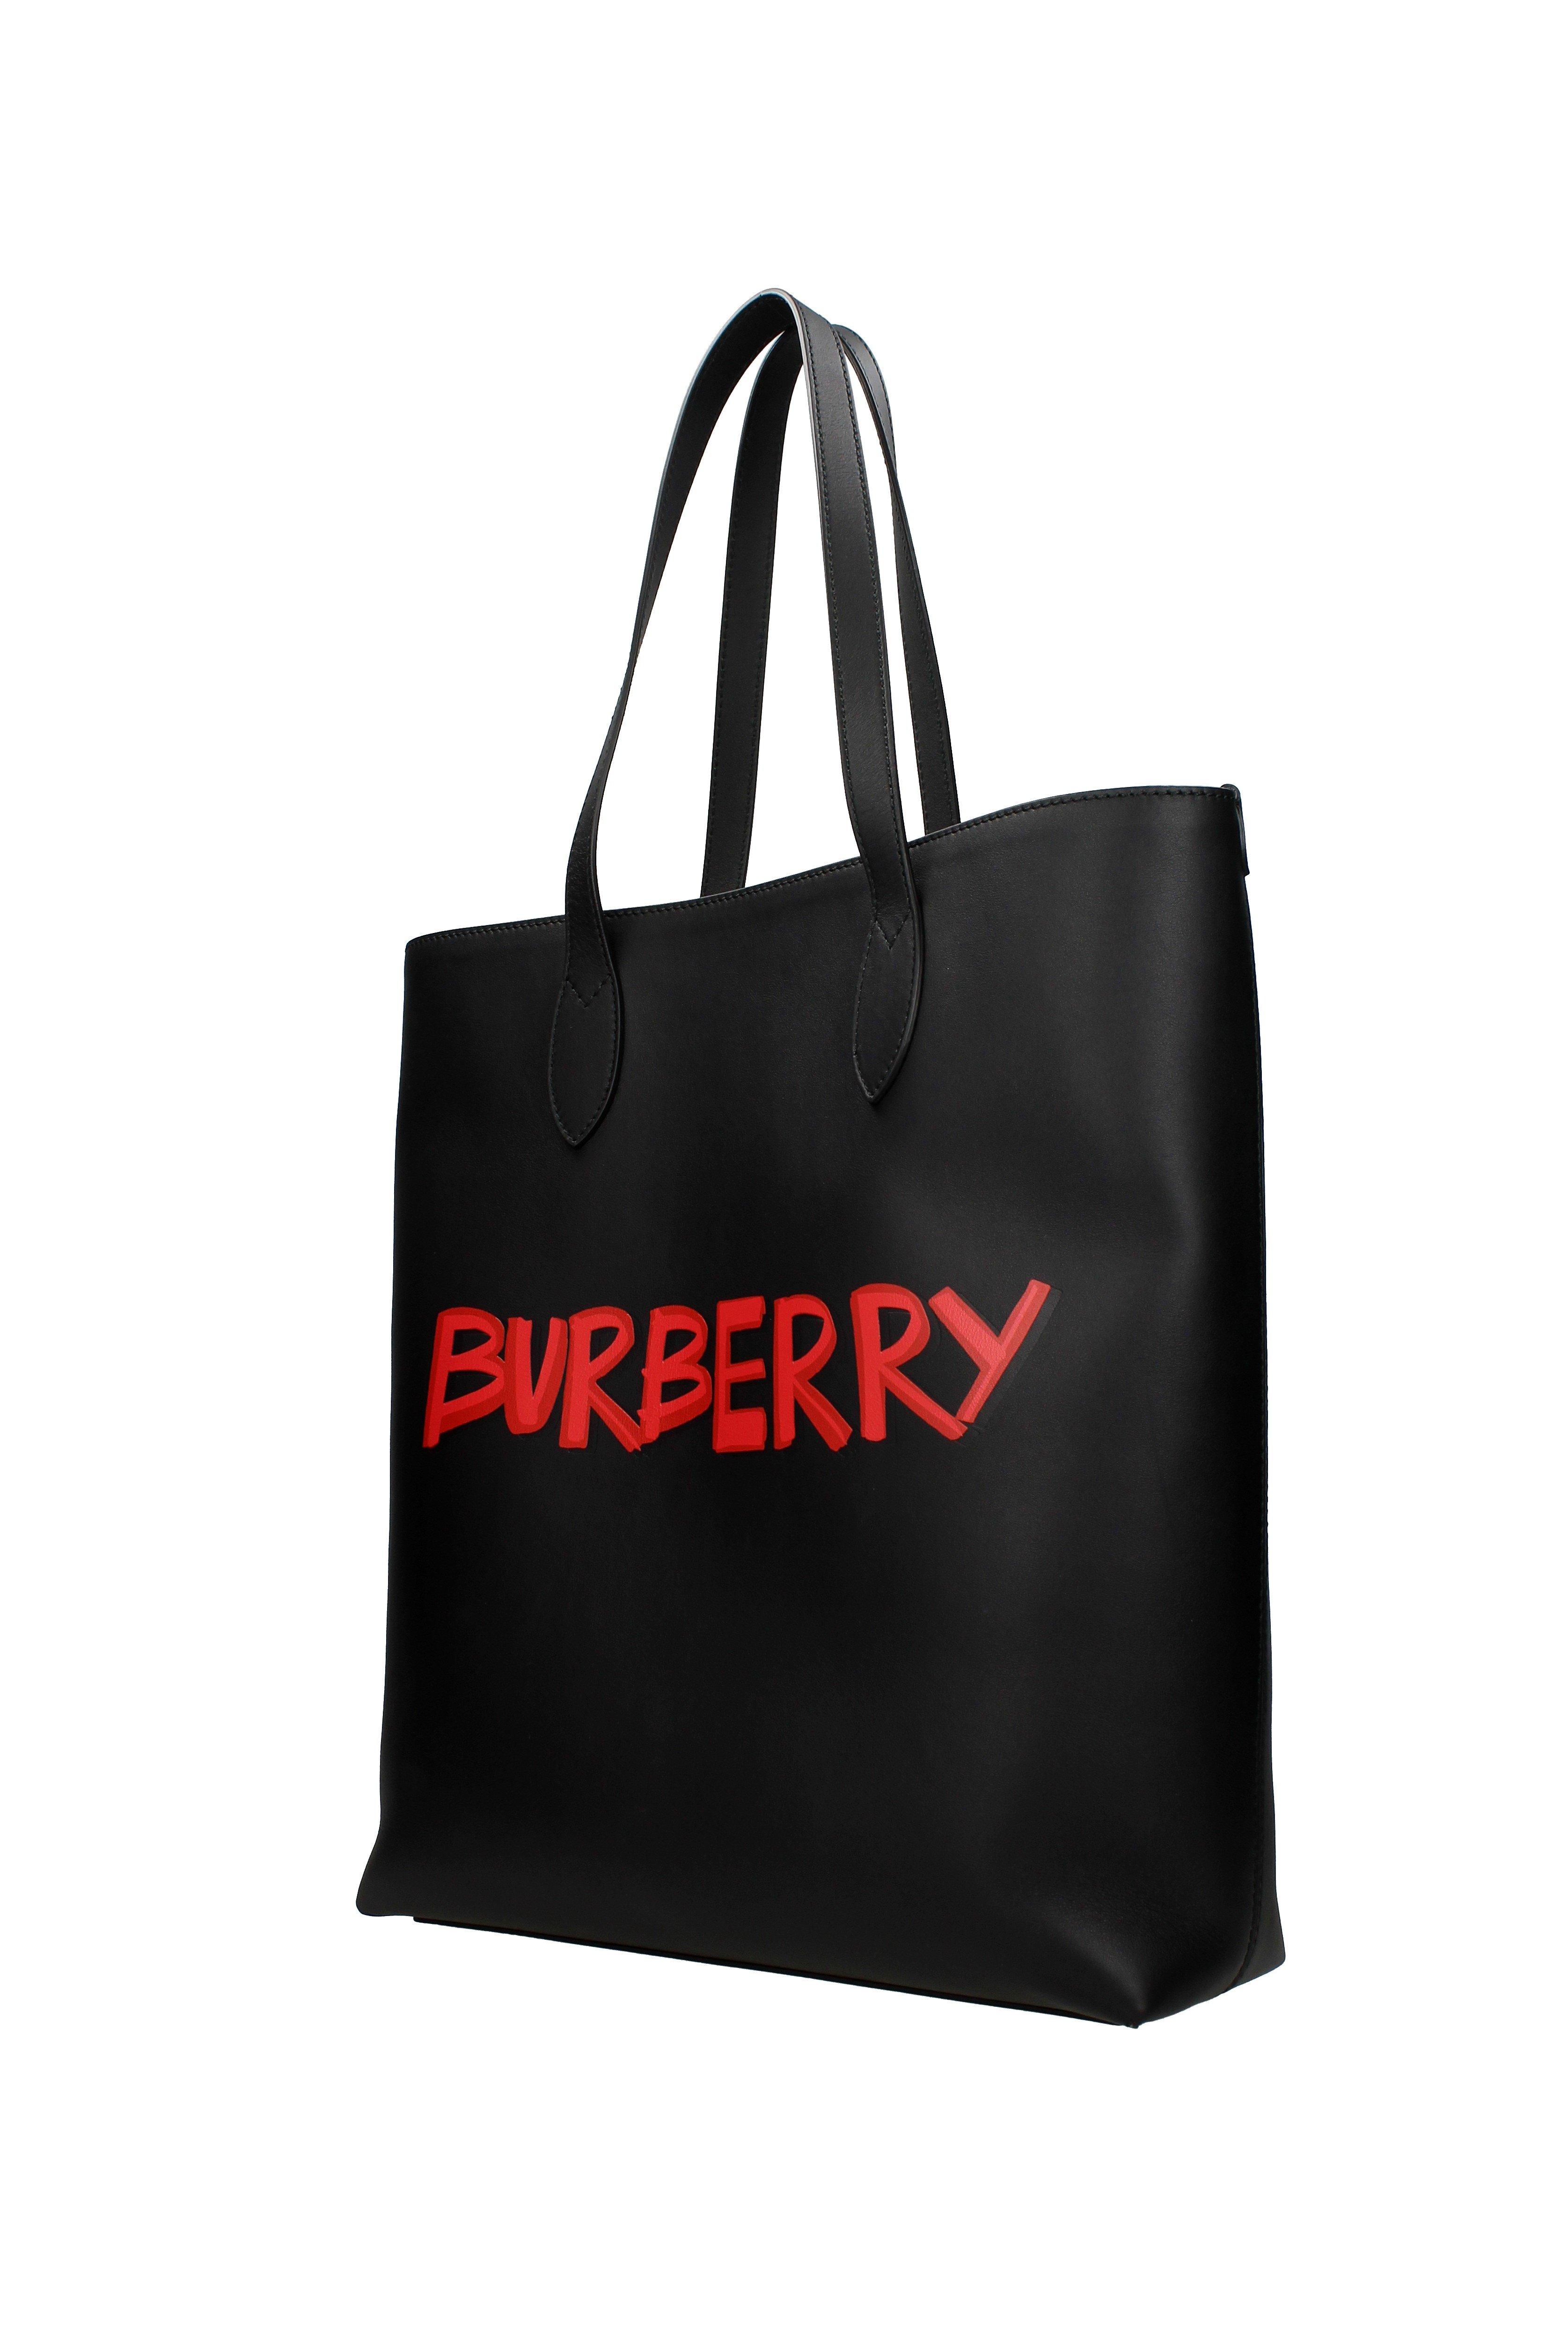 Burberry Shoulder Bags Women Black in Black - Lyst